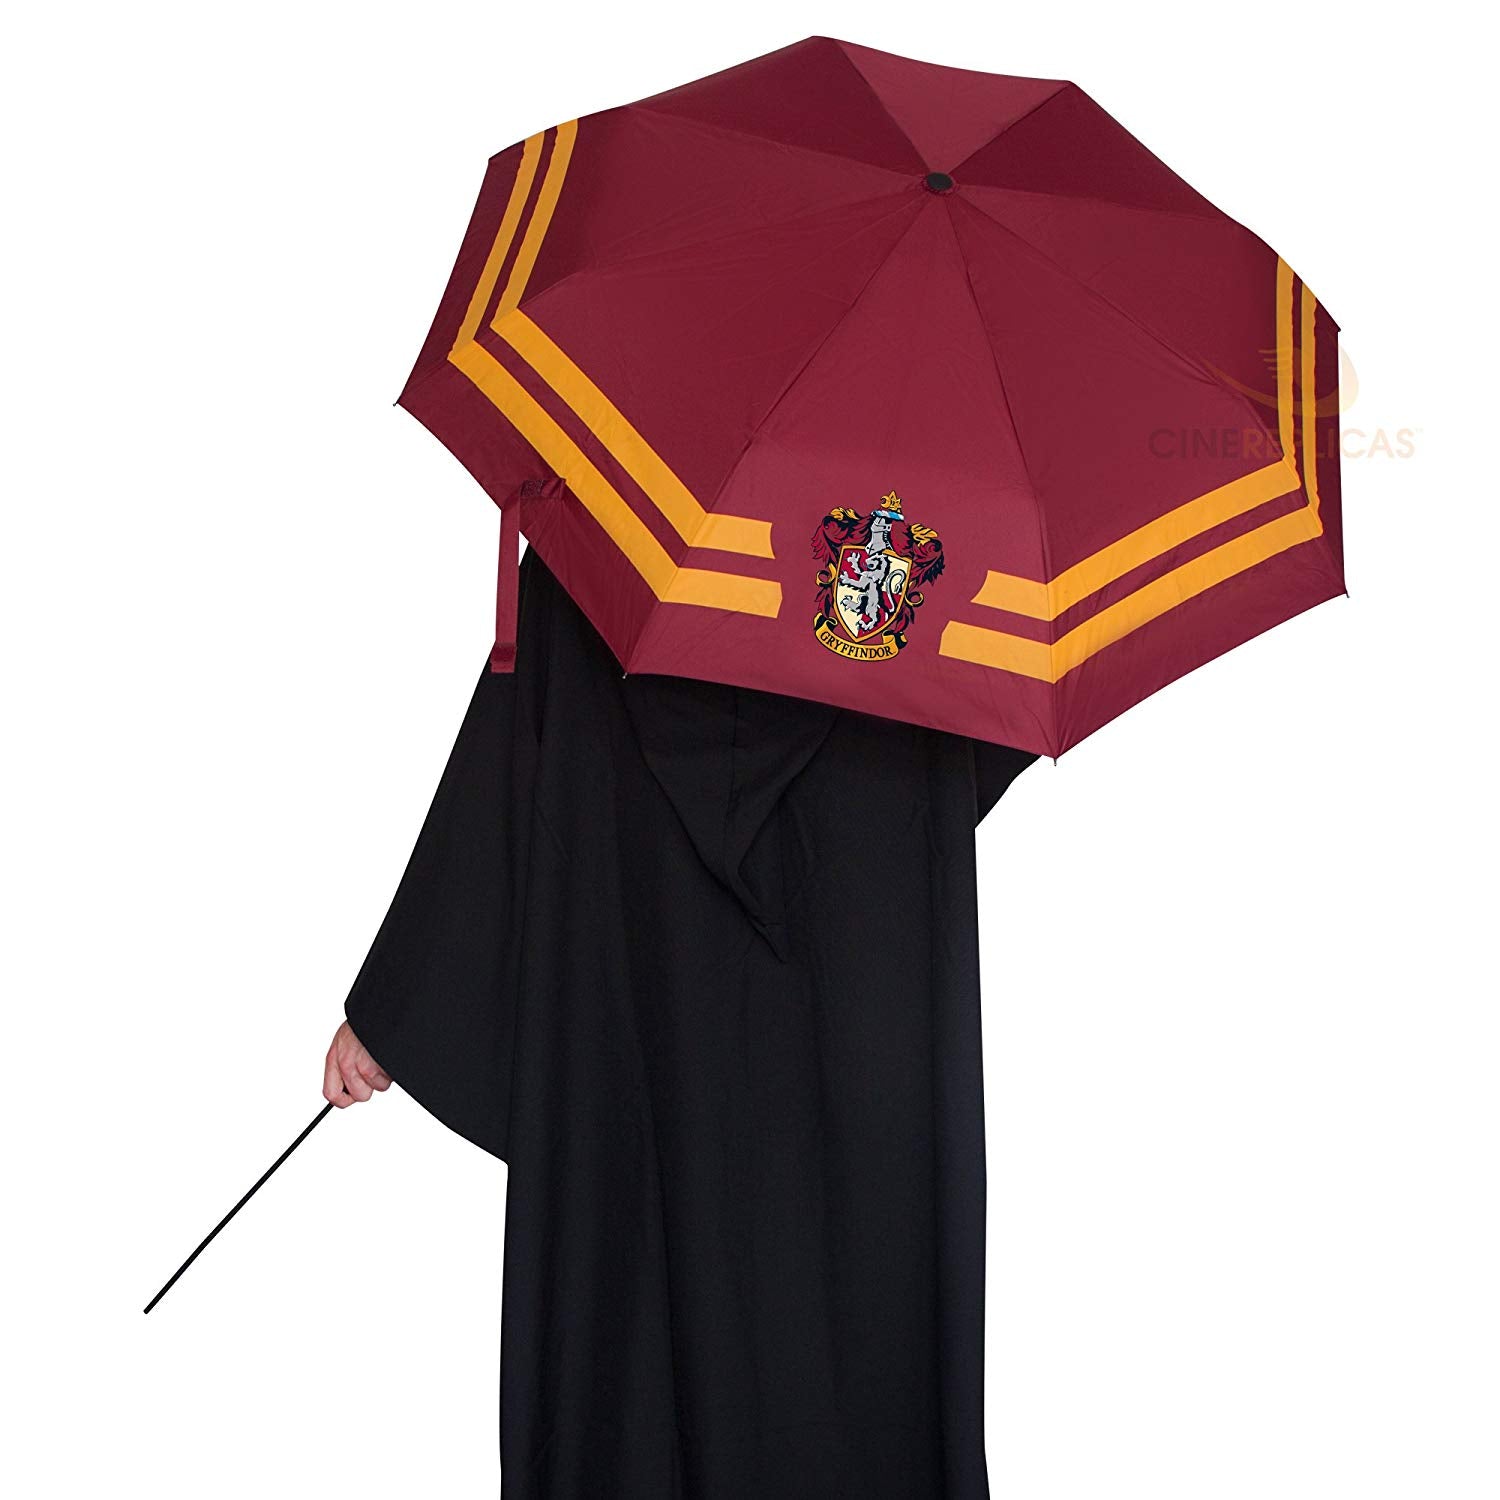 Ombrello - Harry Potter - Gryffindor (Grifondoro)